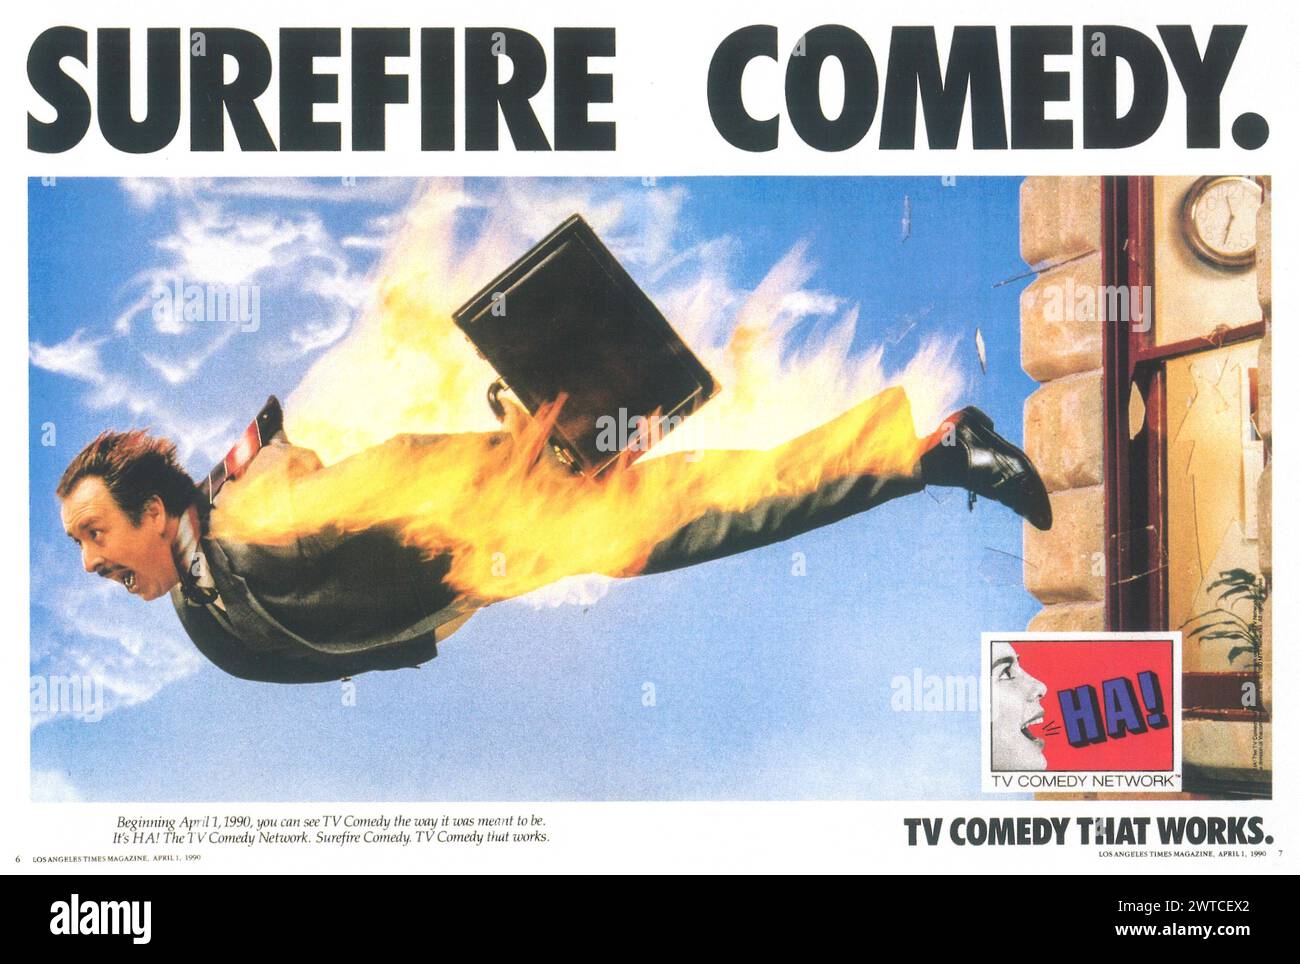 1990 Ha! TV Comedy Network – Werbung für alle Comedy-Kabelsender Stockfoto